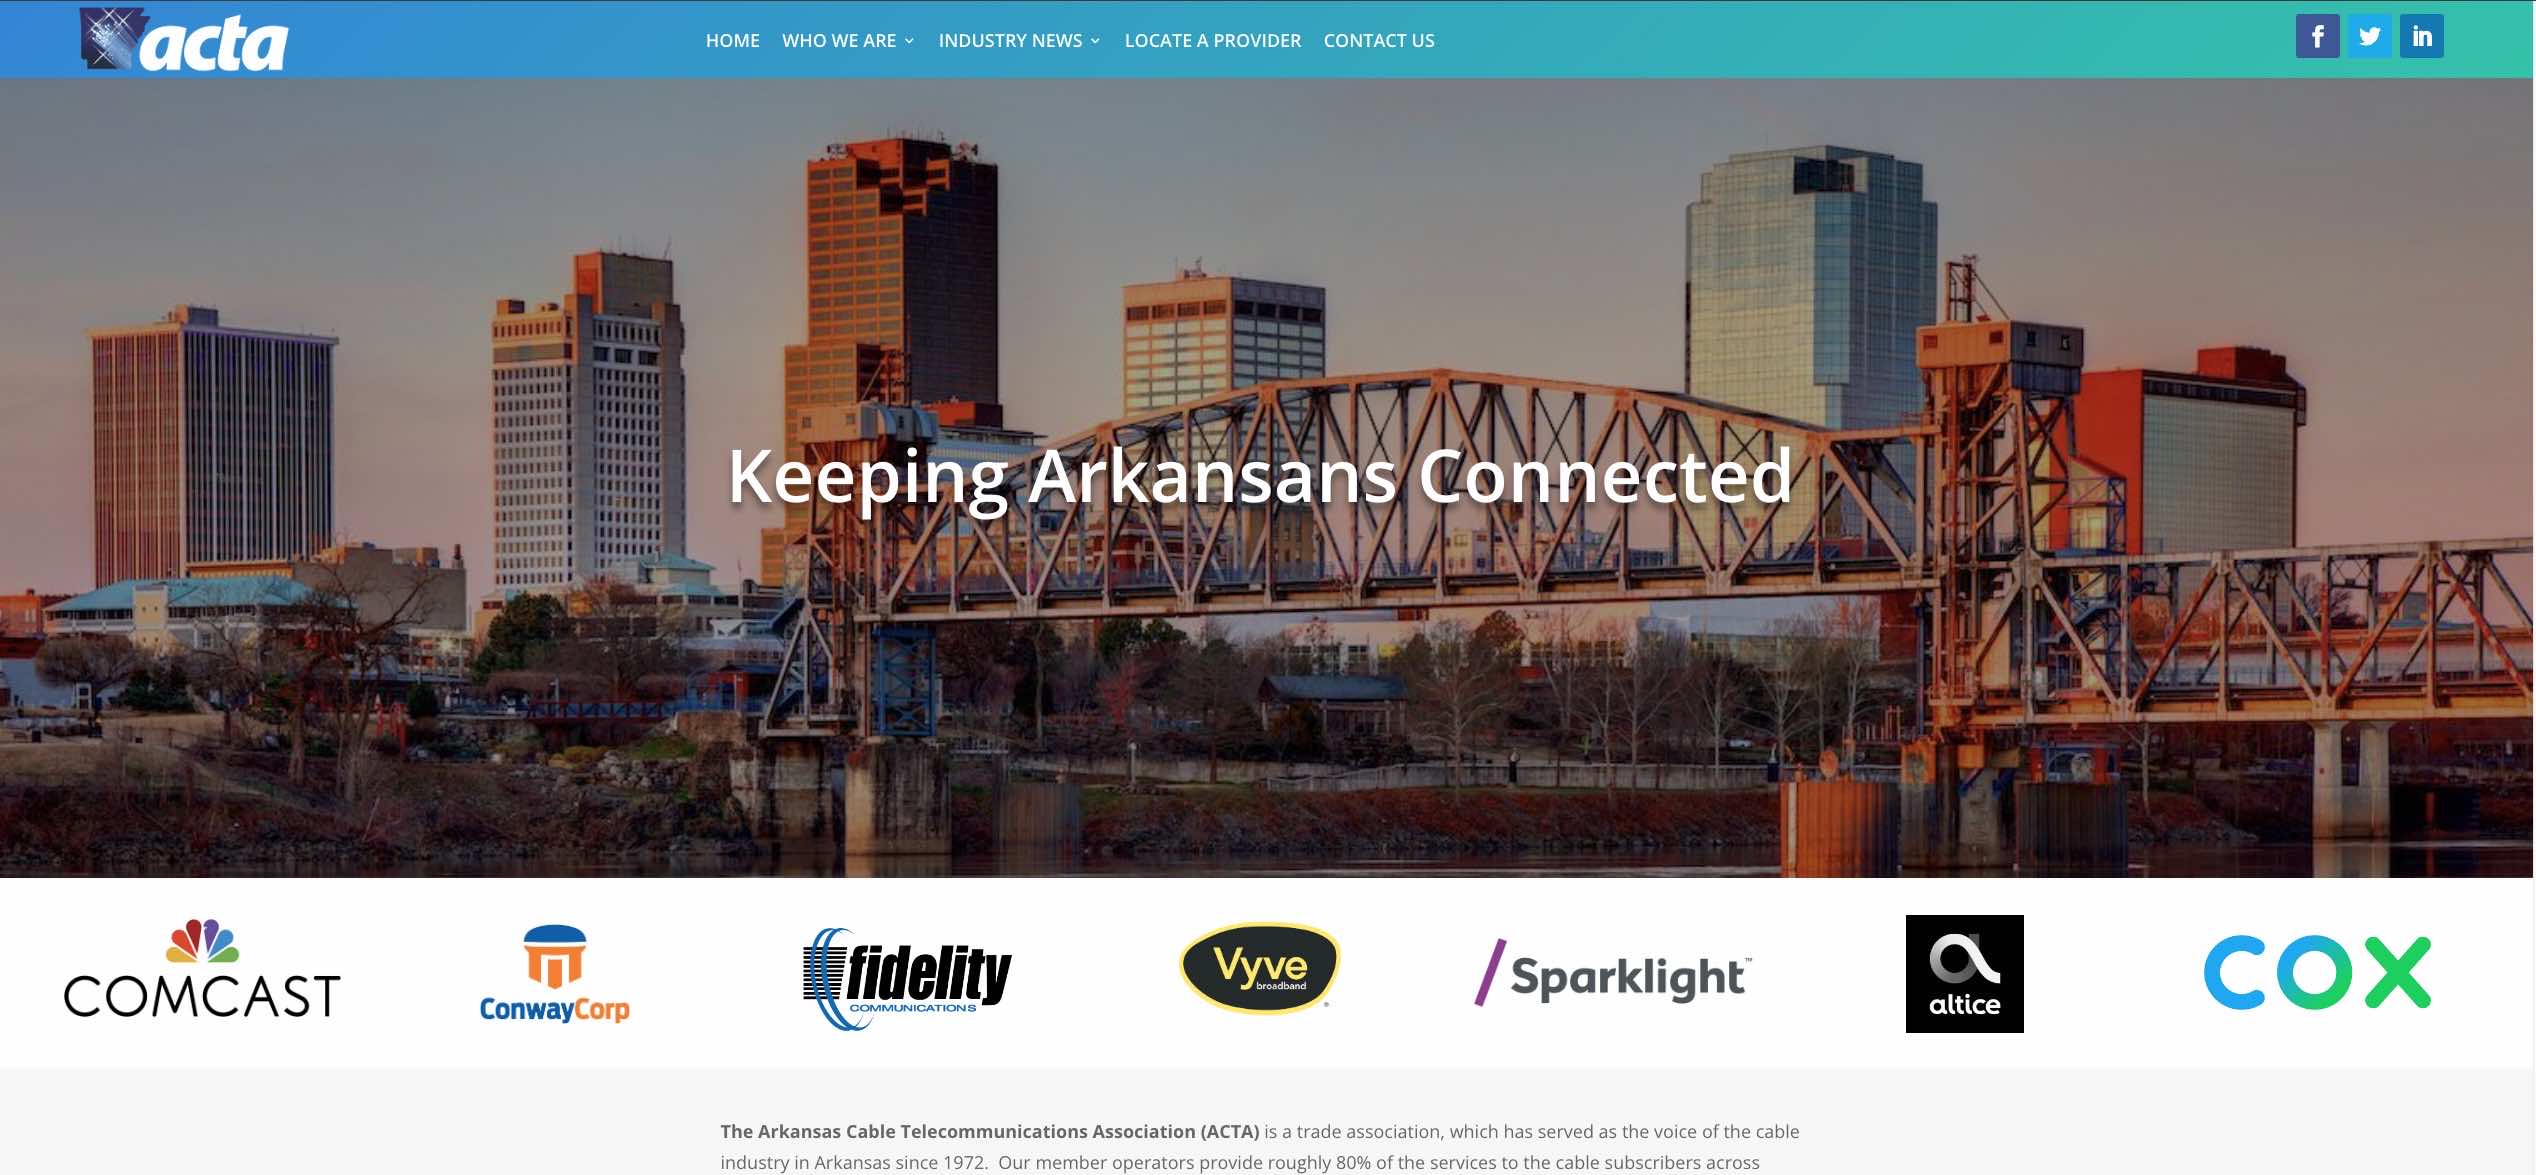 The Arkansas Cable Telecommunications Association